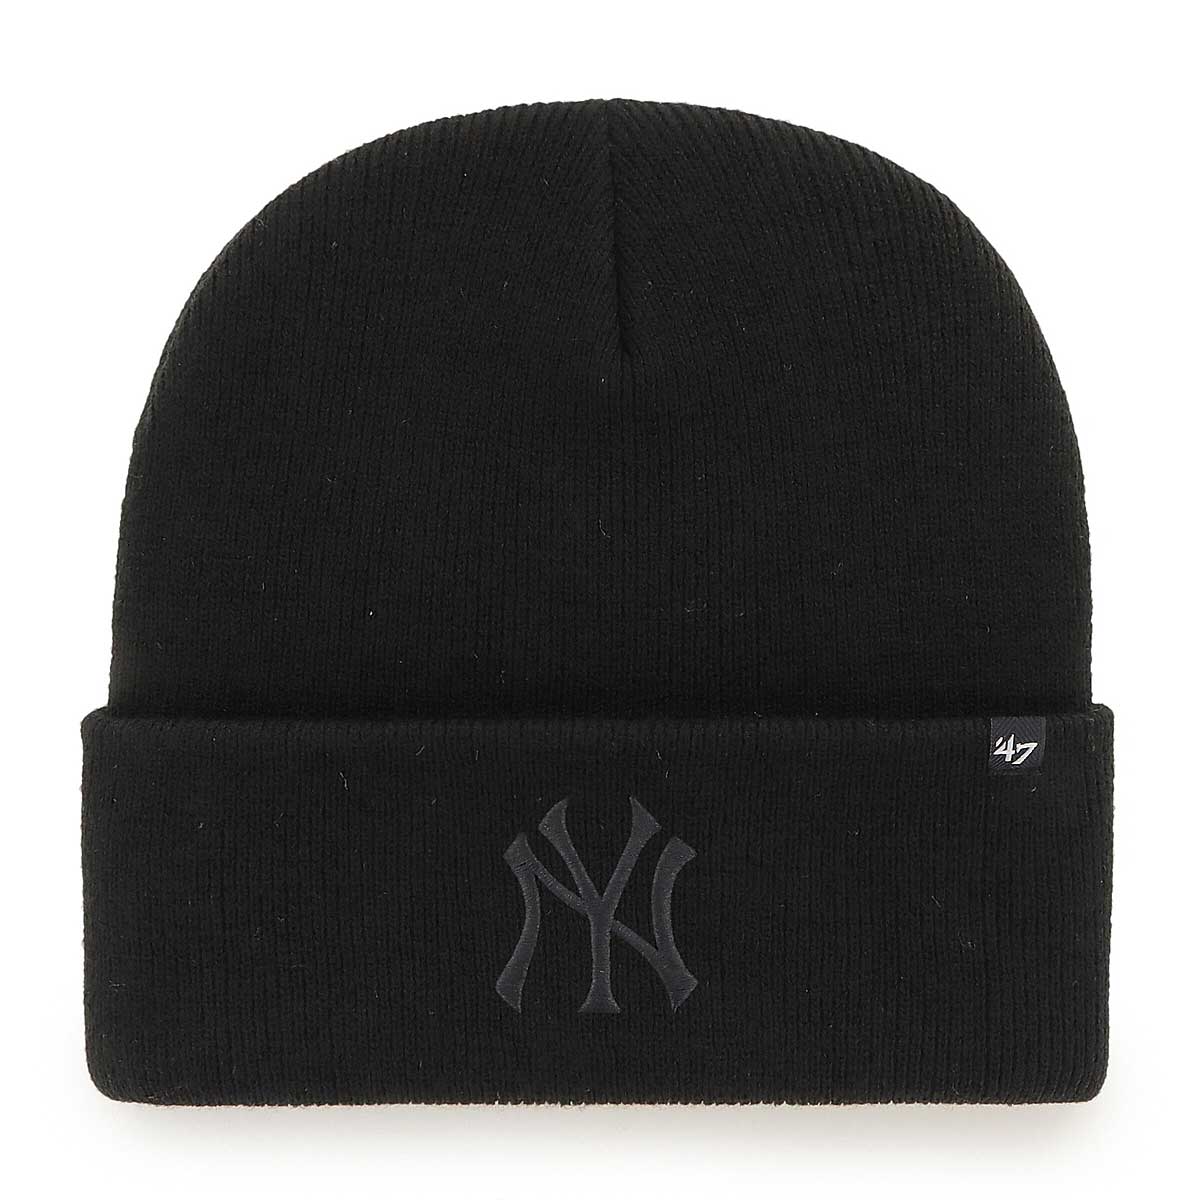 47 Mlb New York Yankees Cuff Knit, Black/Black